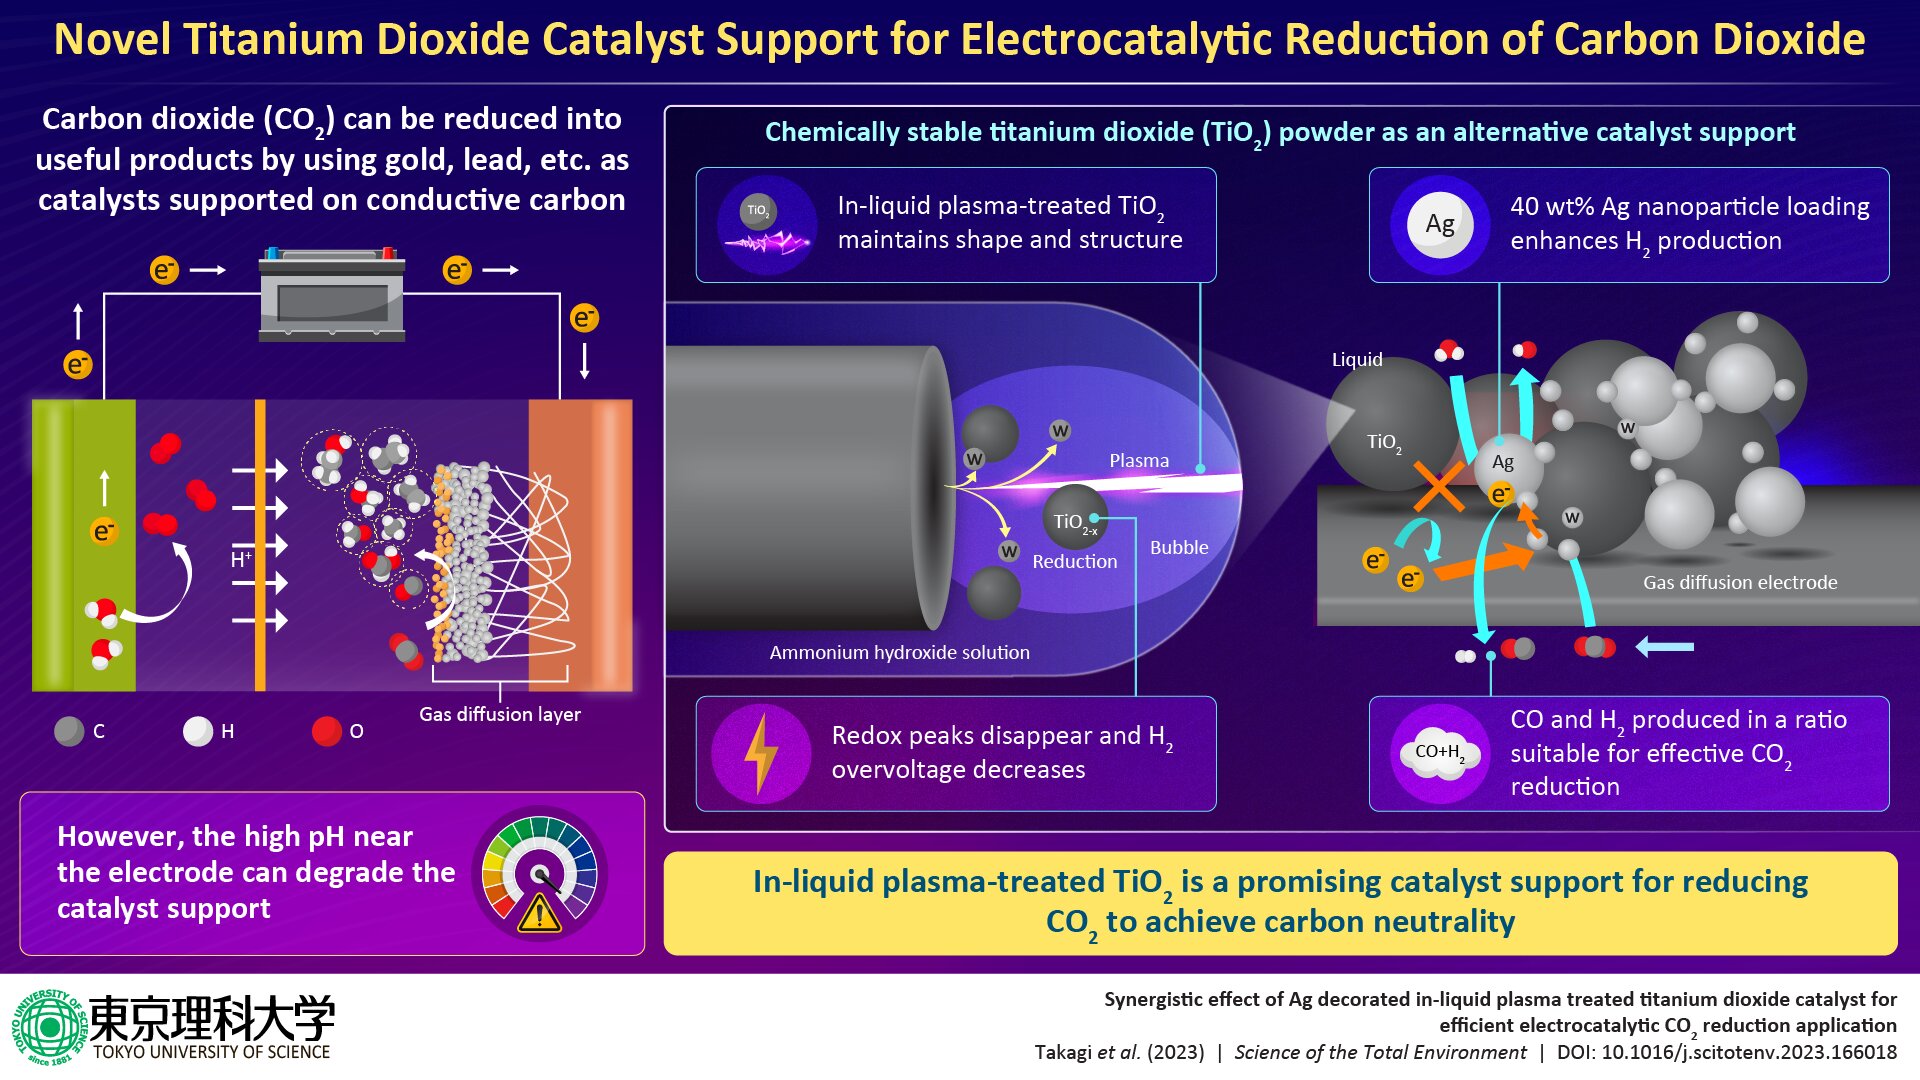 Novel titanium dioxide catalyst shows promise for electrocatalytic carbon dioxide reduction